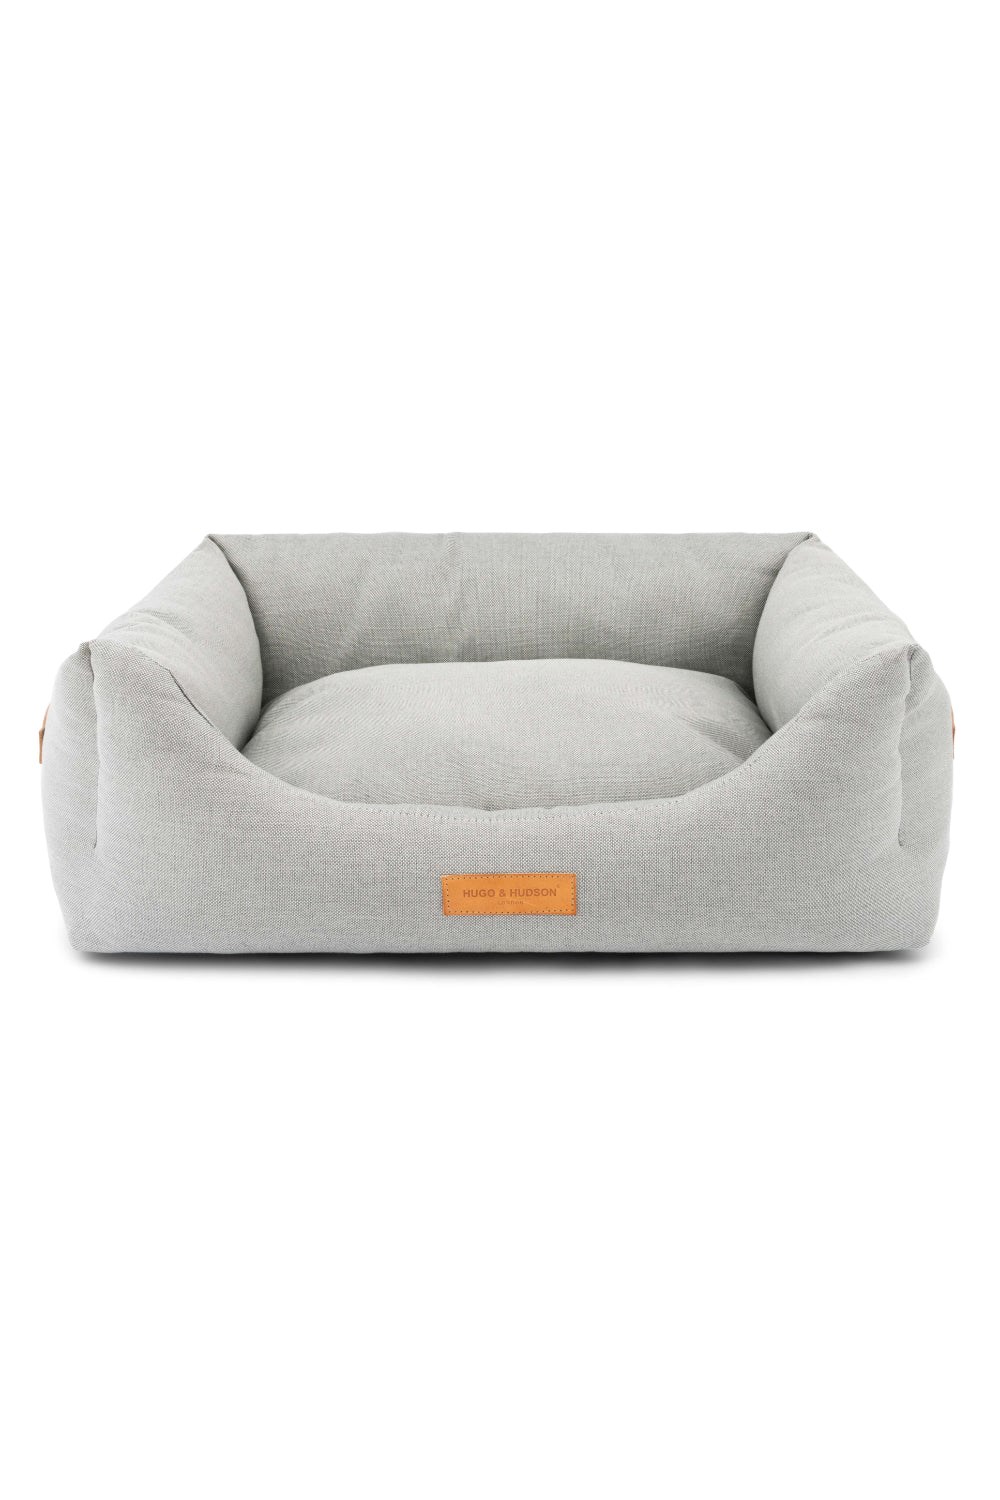 Luxury Pet Dog Bed -